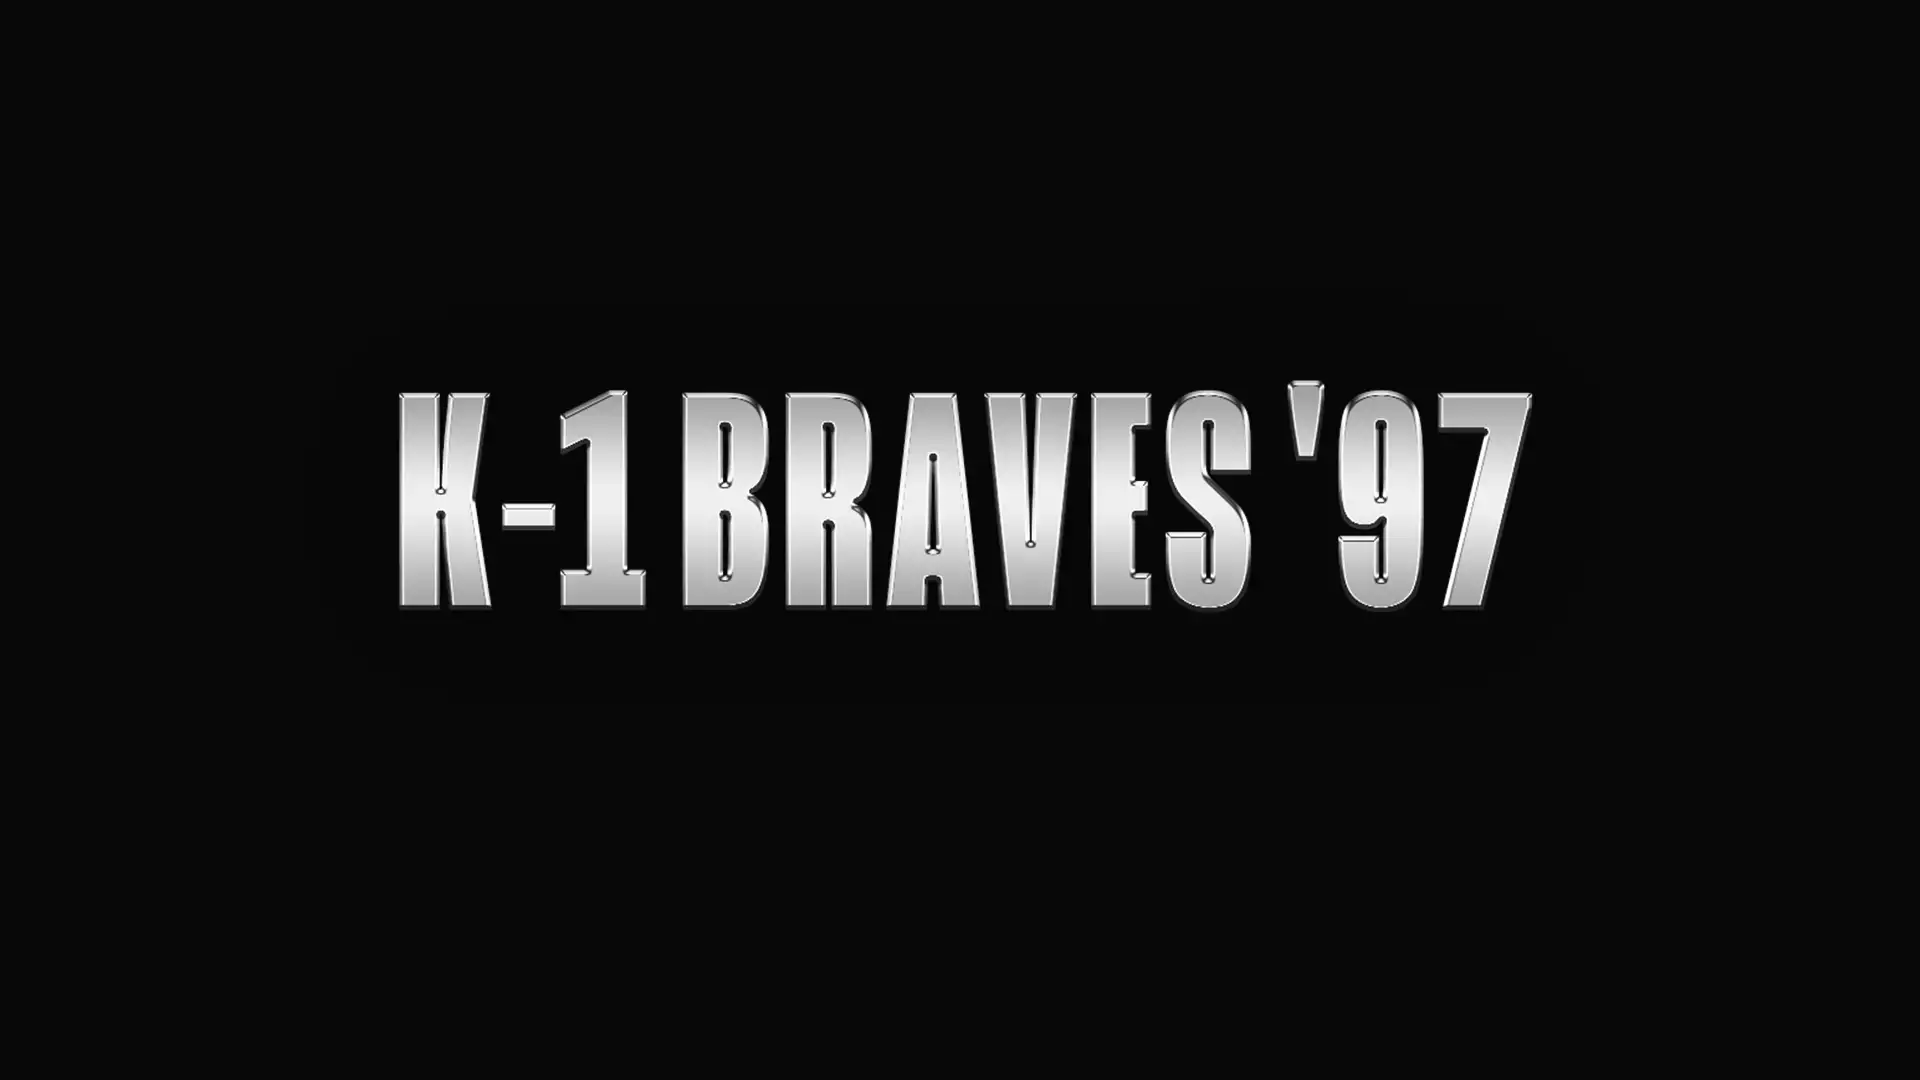 K-1 Braves '97